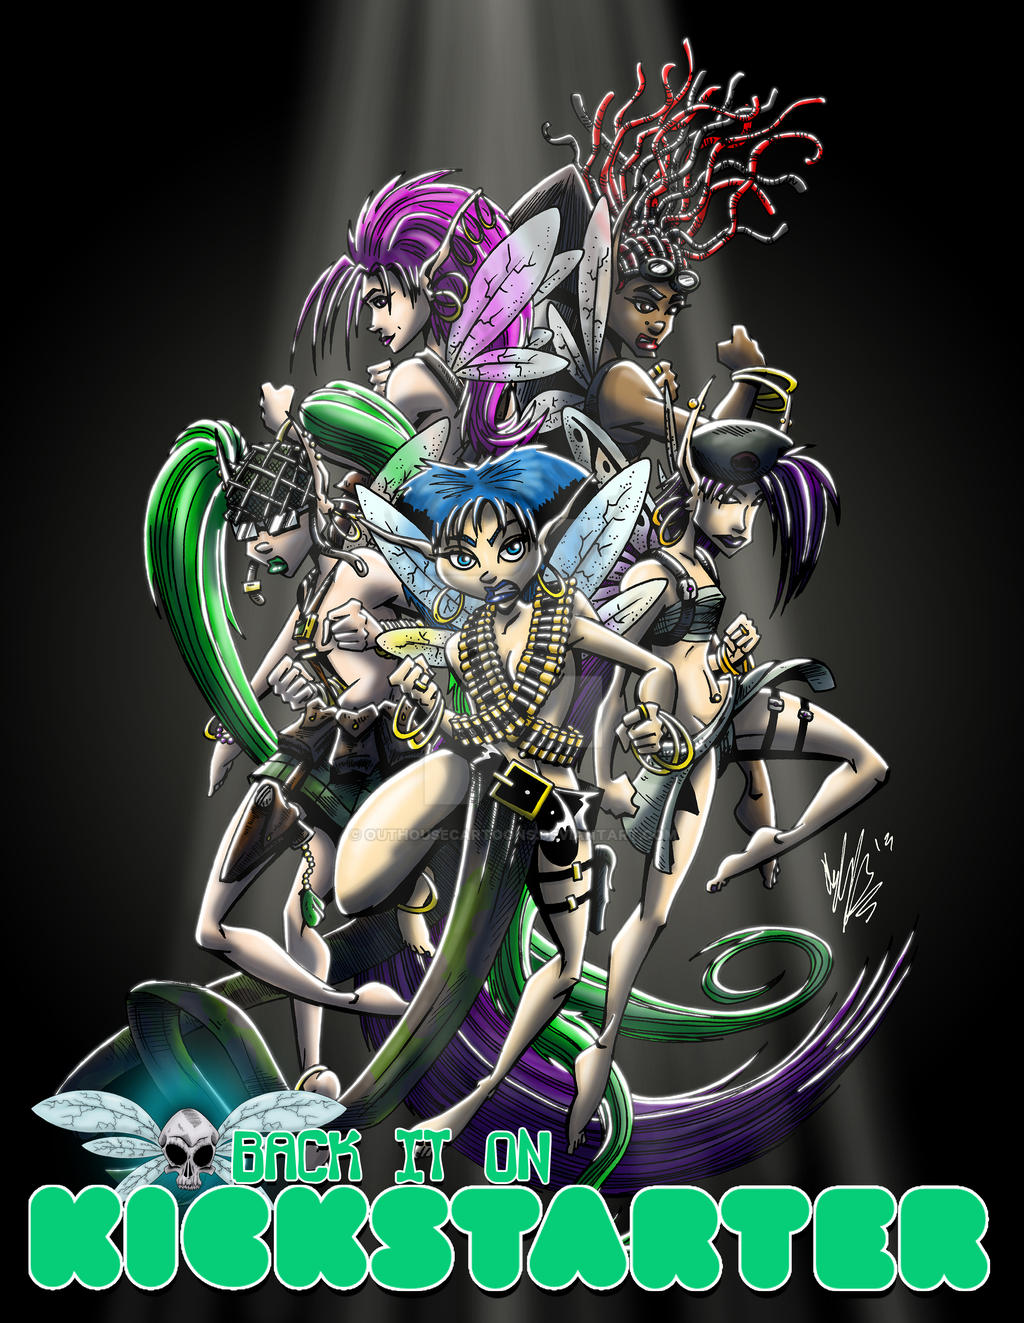 Bonus Combat Fairies Kickstarter Image!